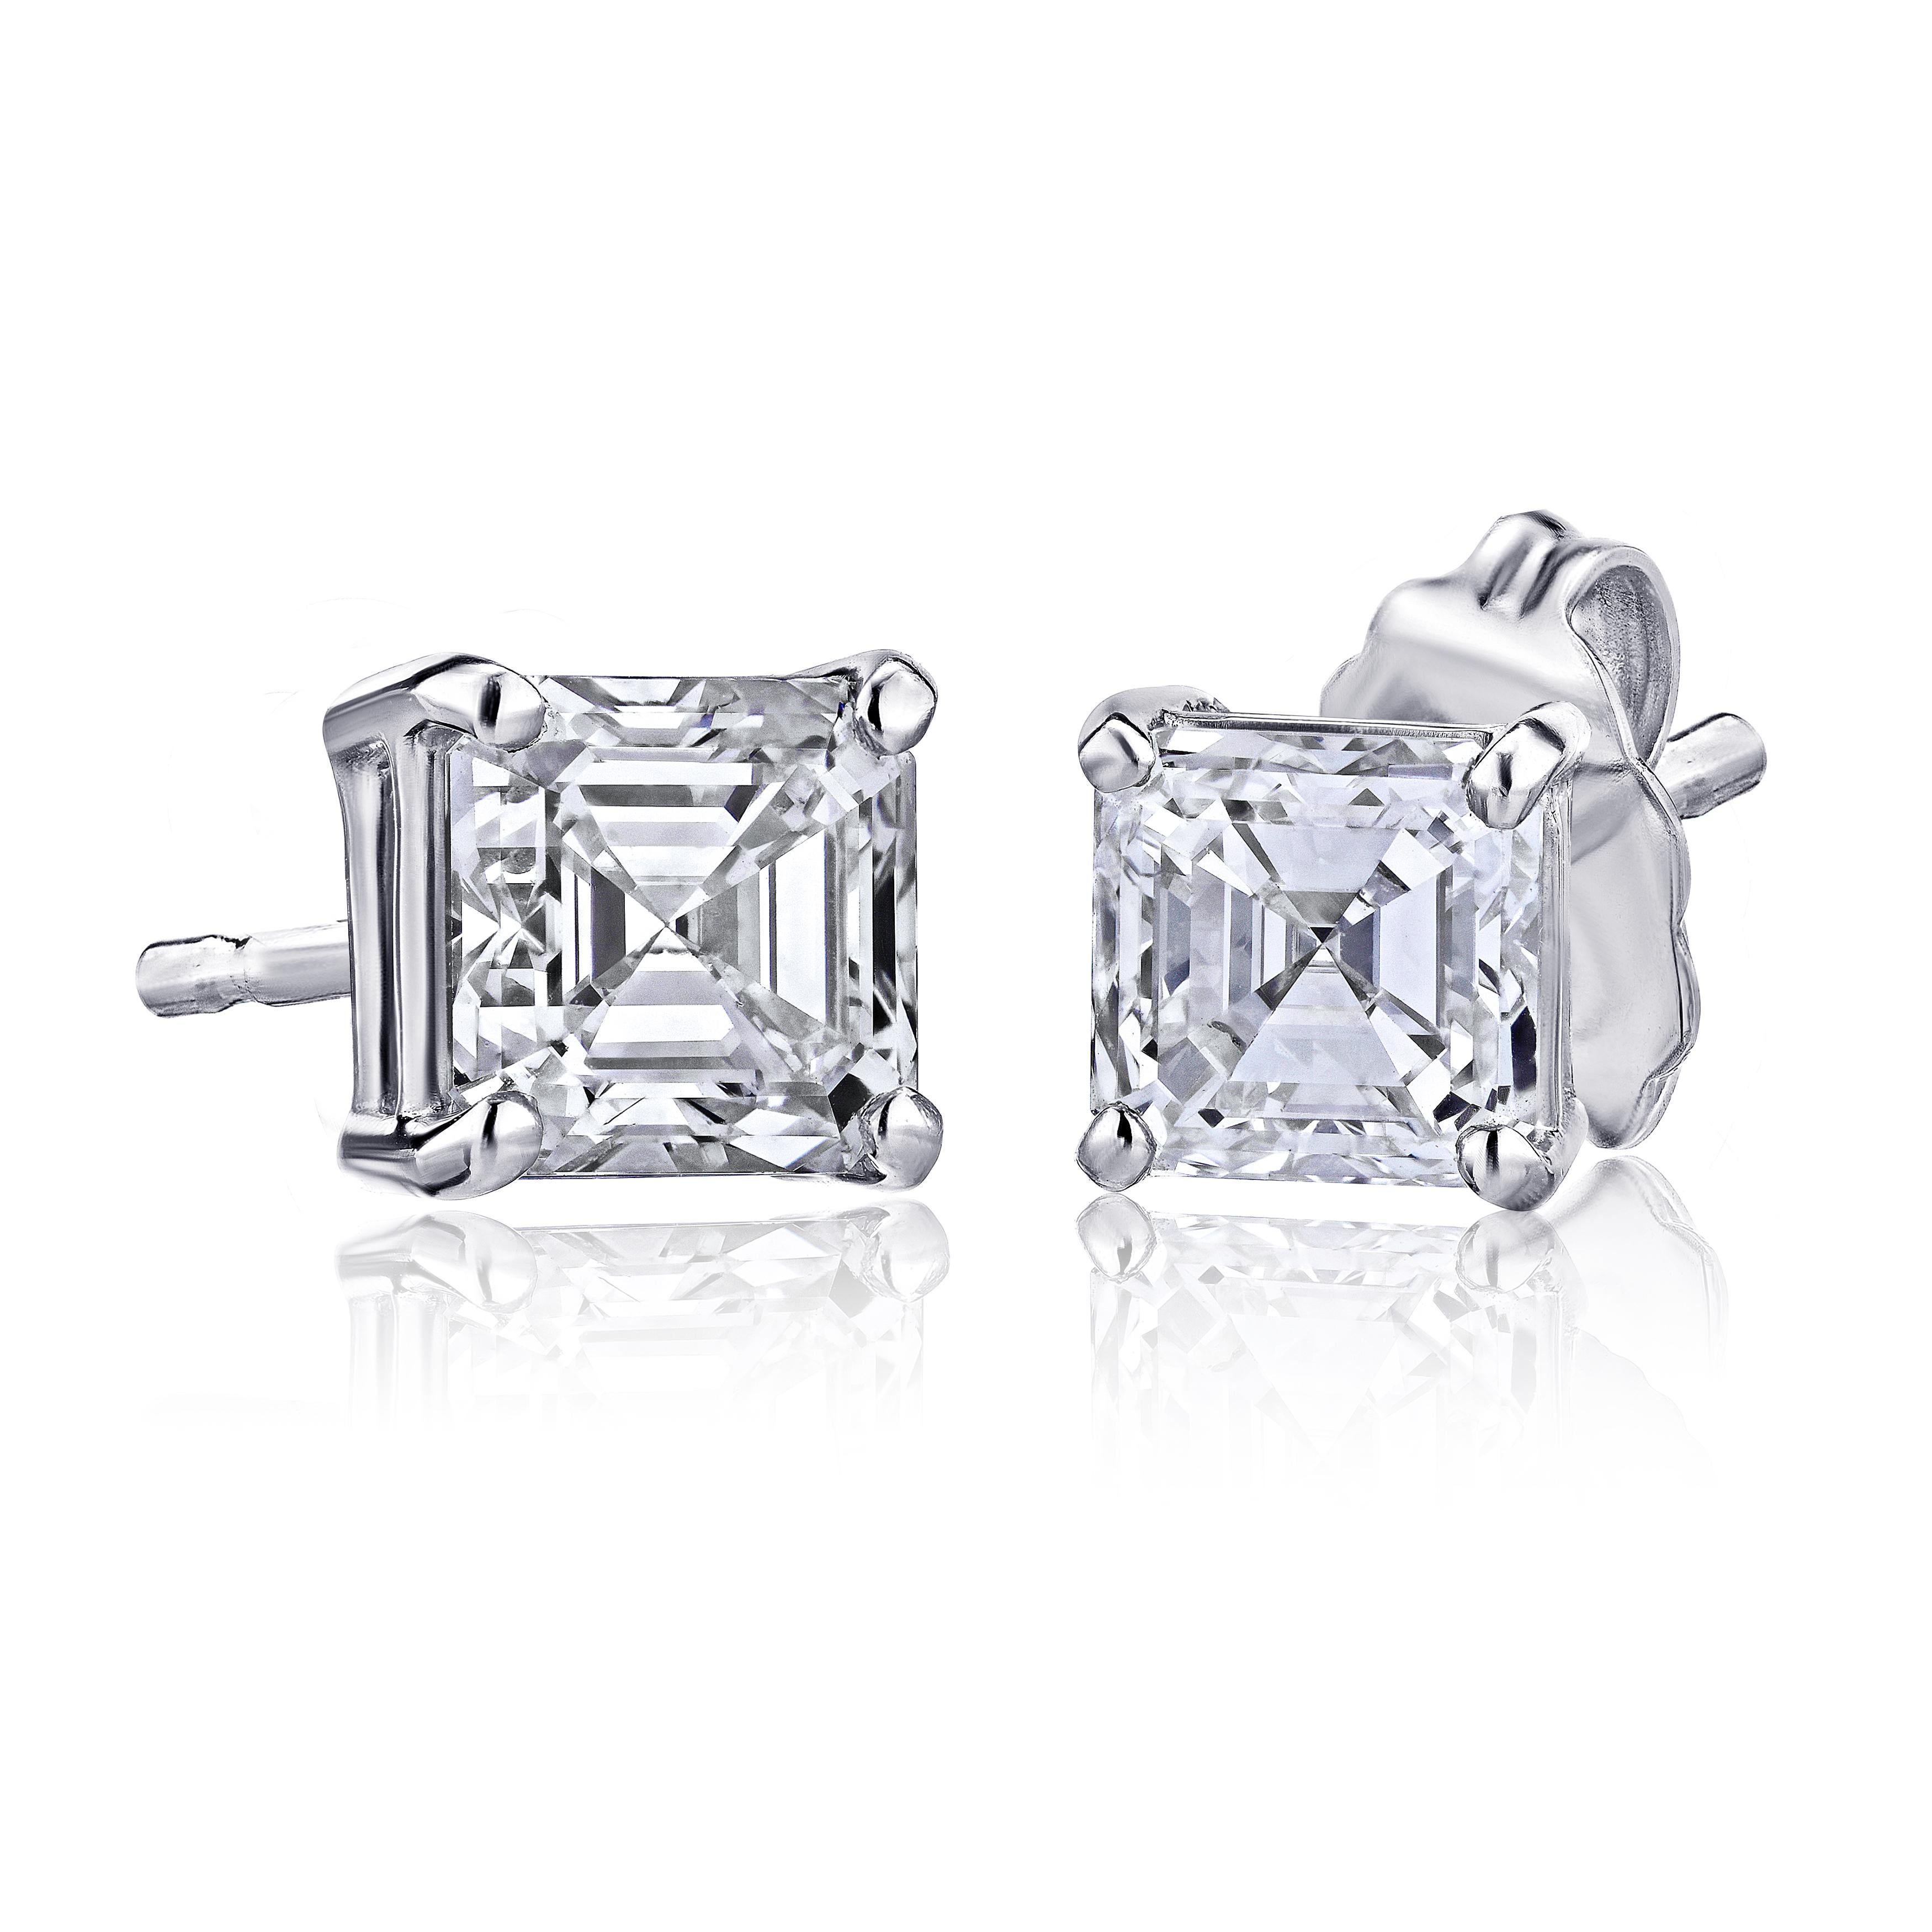 Contemporary GIA Certified Platinum Ascher Cut Diamond Studs 0.75 Carat Total